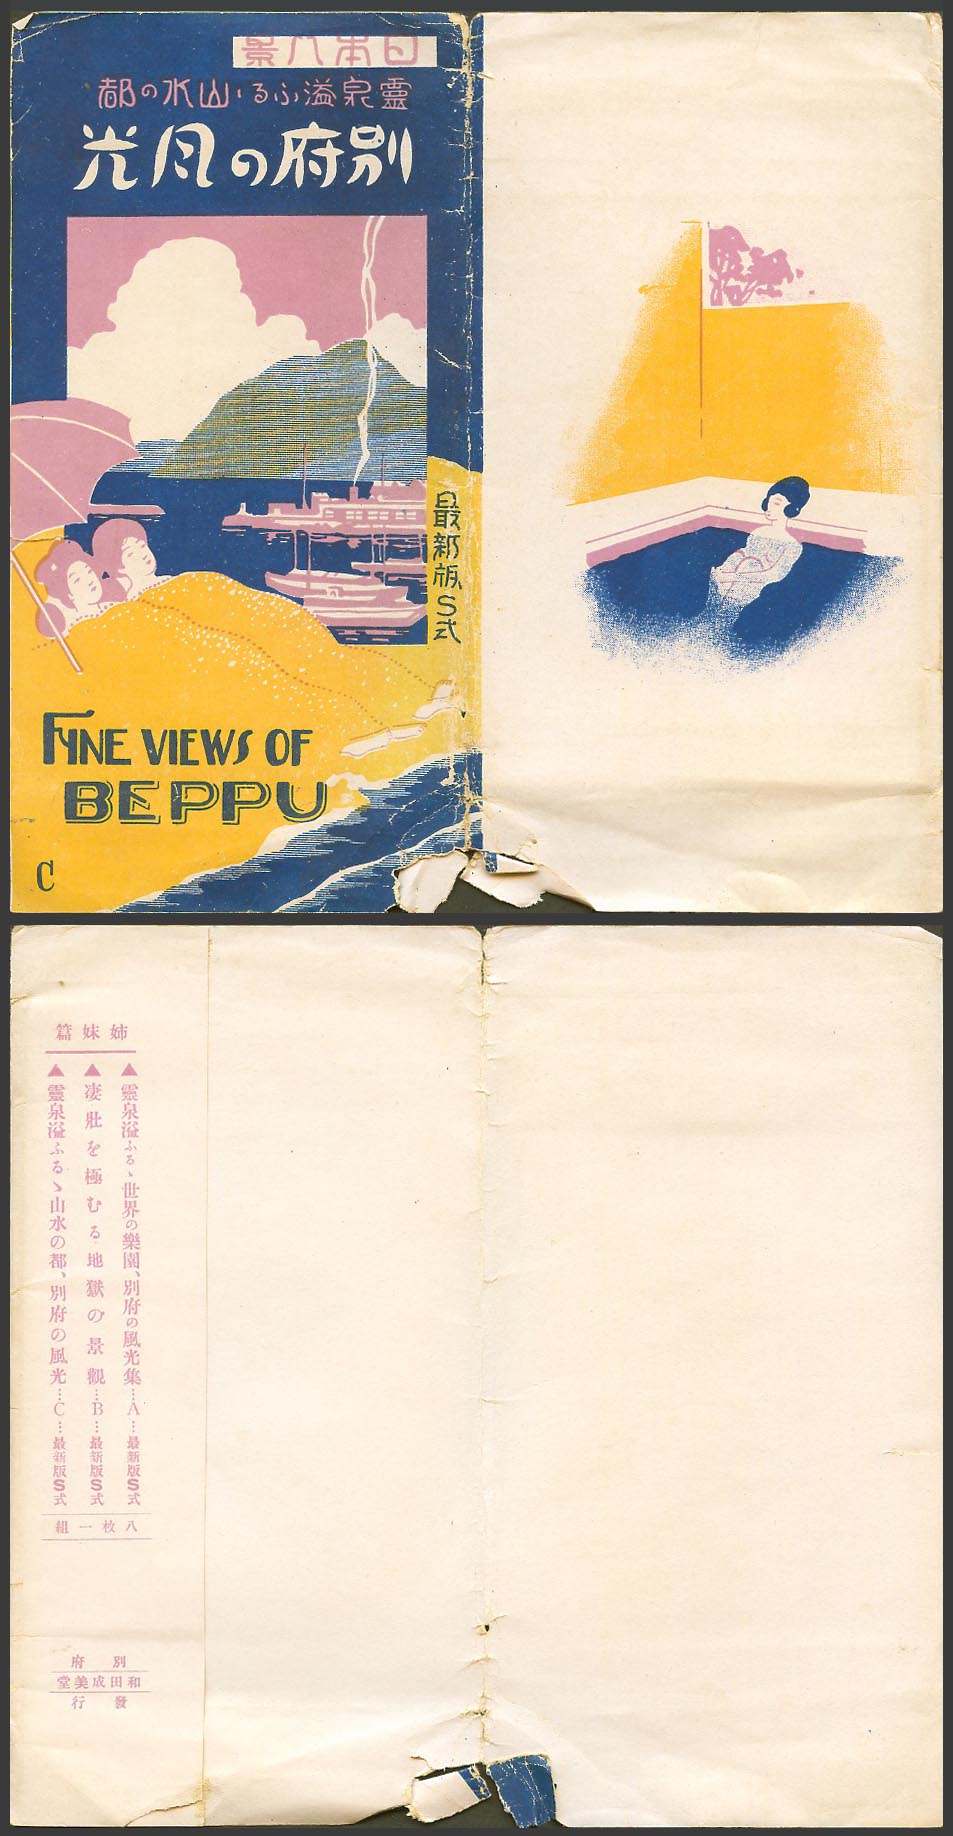 Japan Old Empty Postcard Wallet Sleeve, Fine Views of Beppu Harbour Boats Geisha